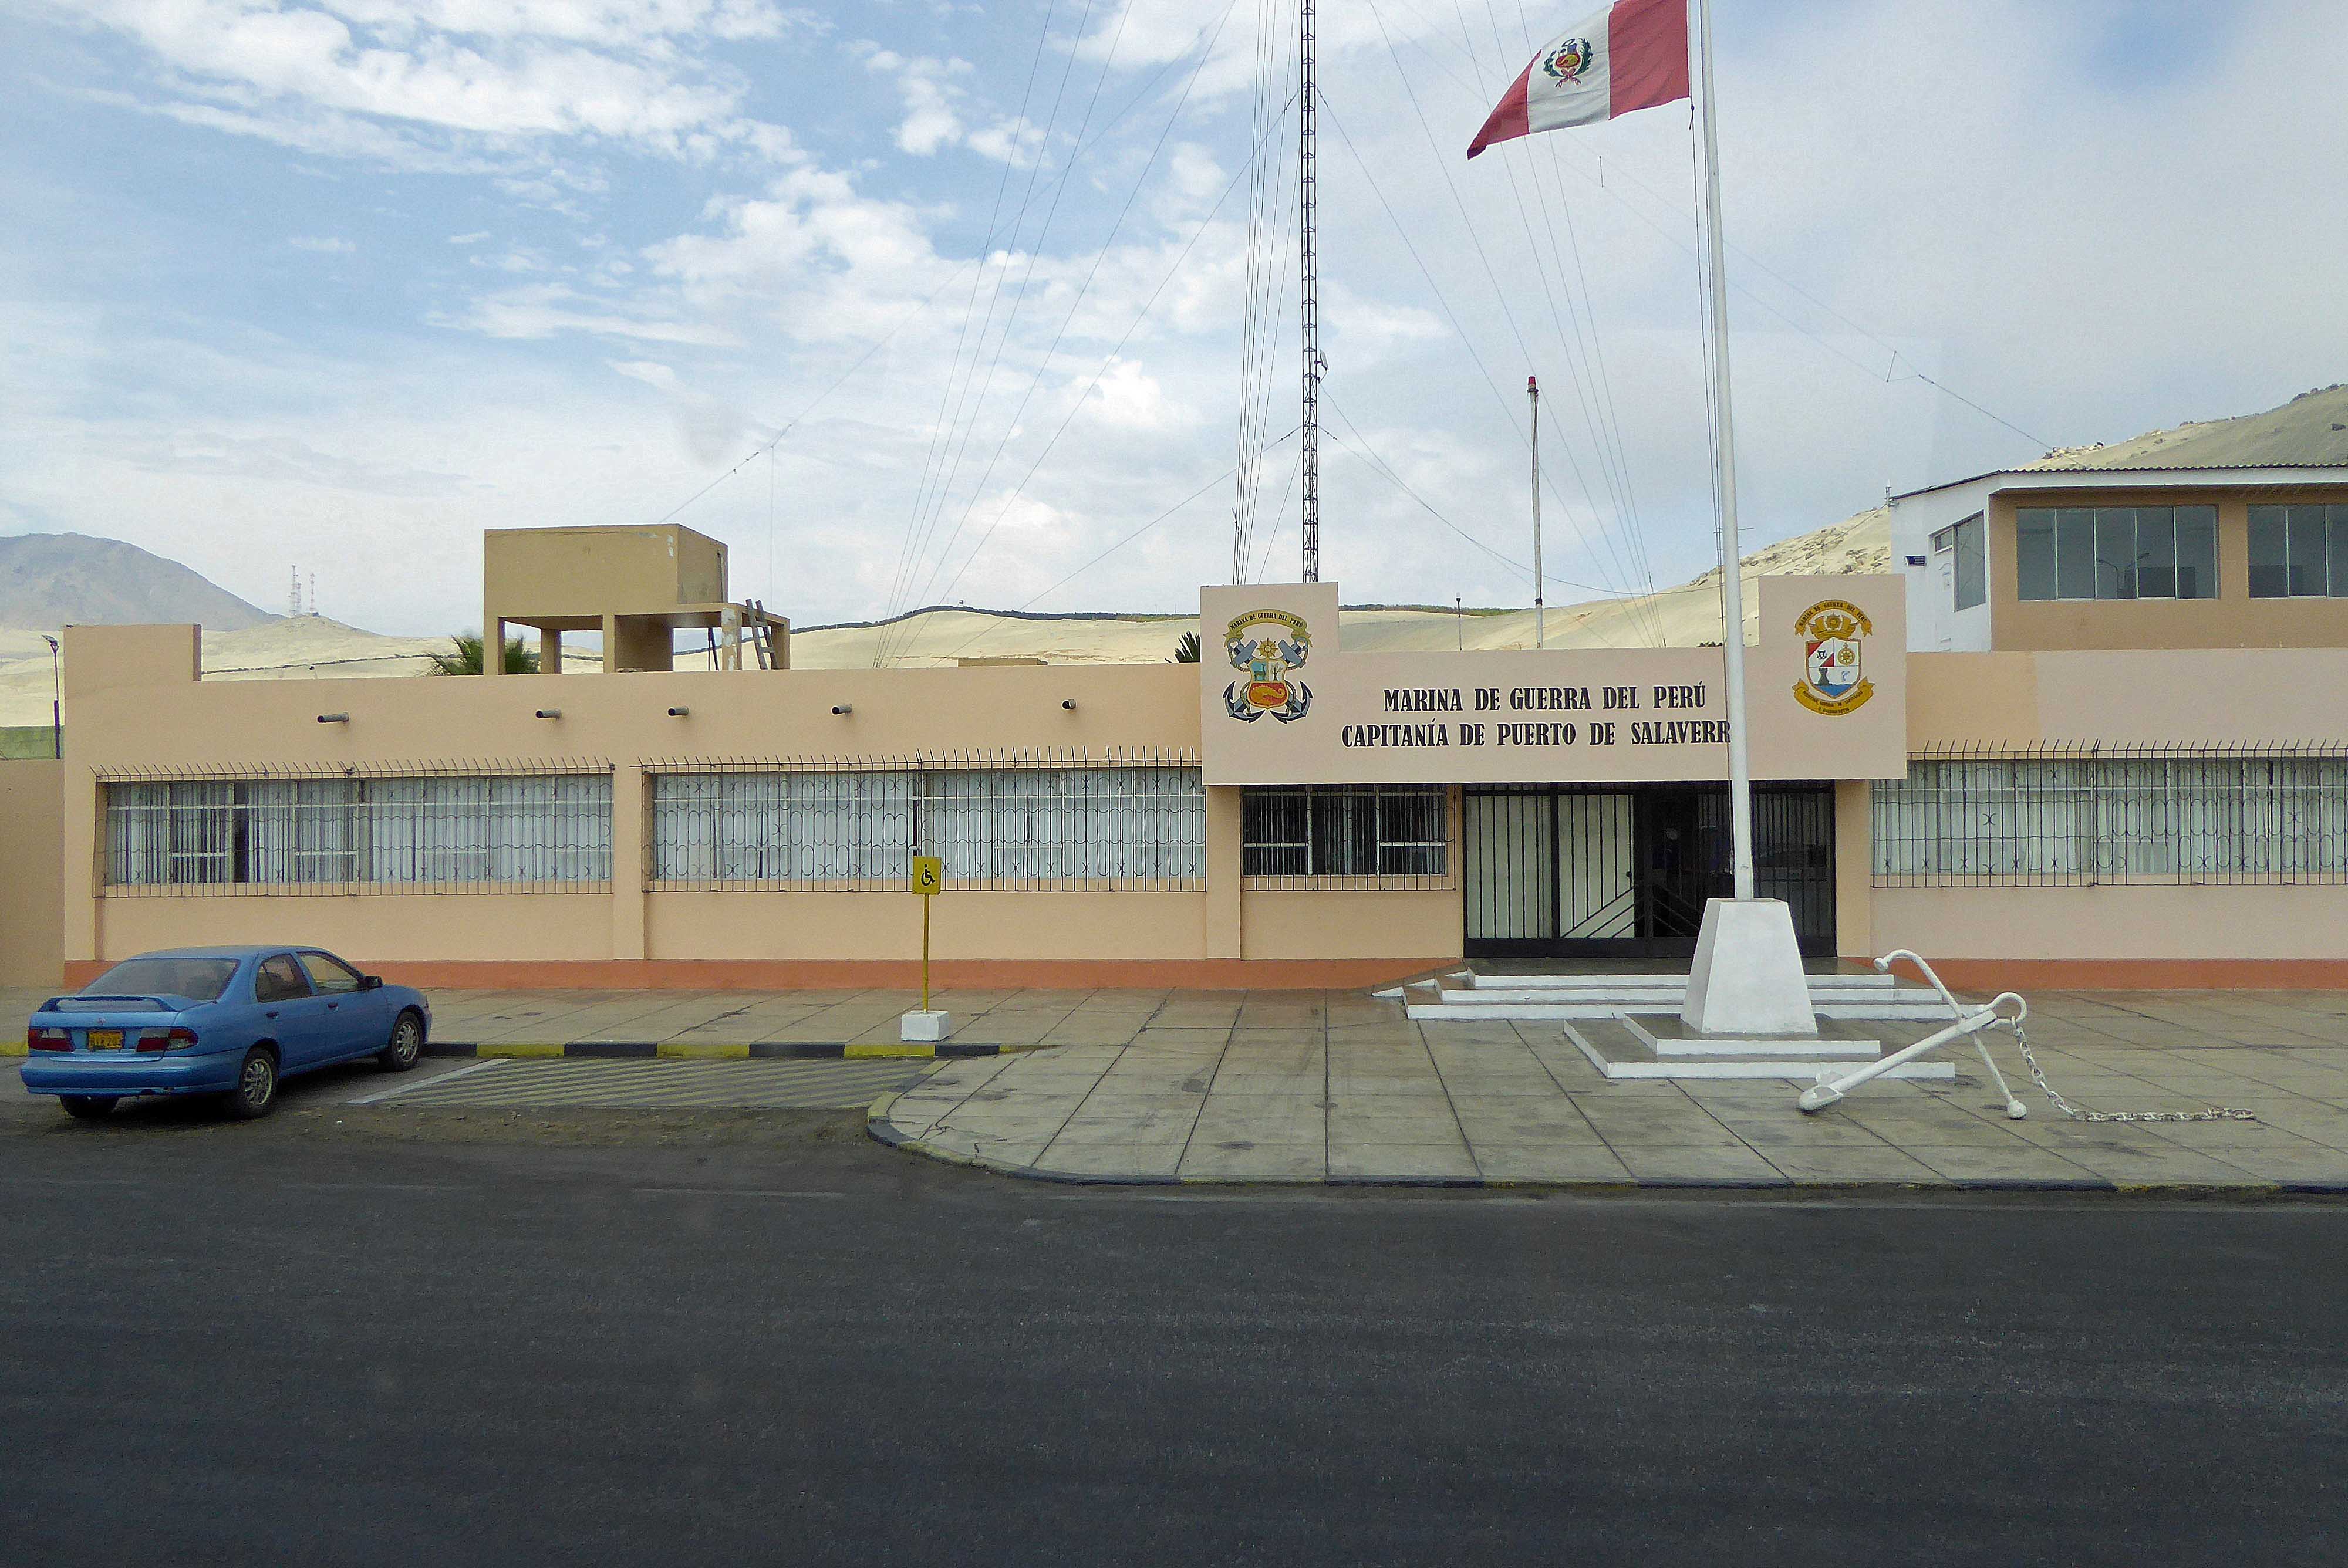 Port of Salaverry, Peru